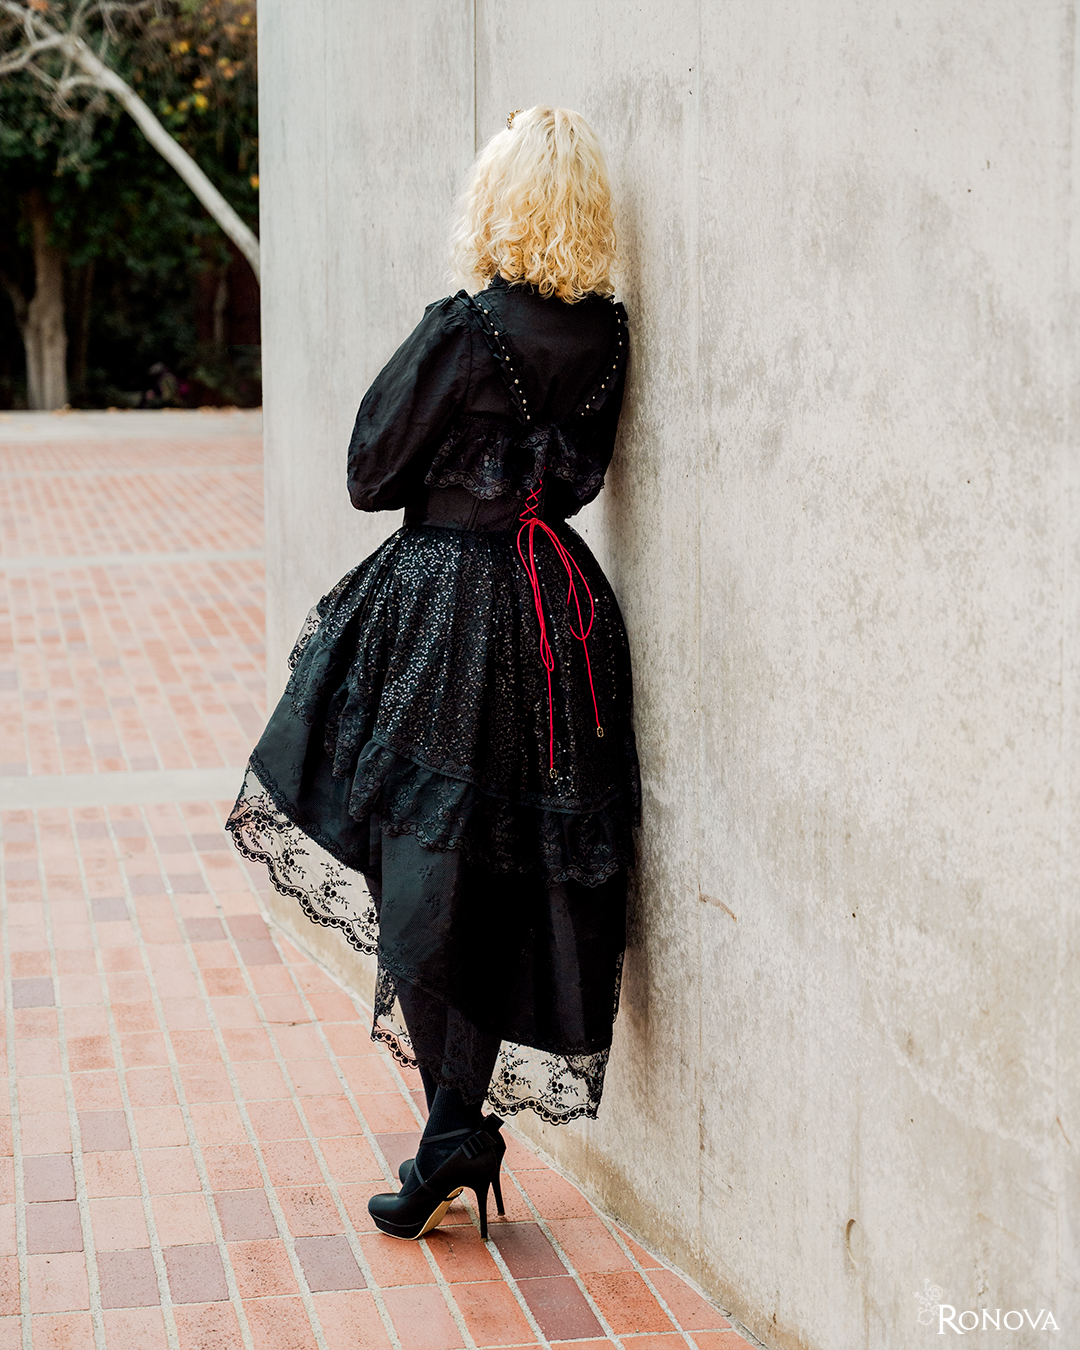 The Dark Grace Dress by Ronova